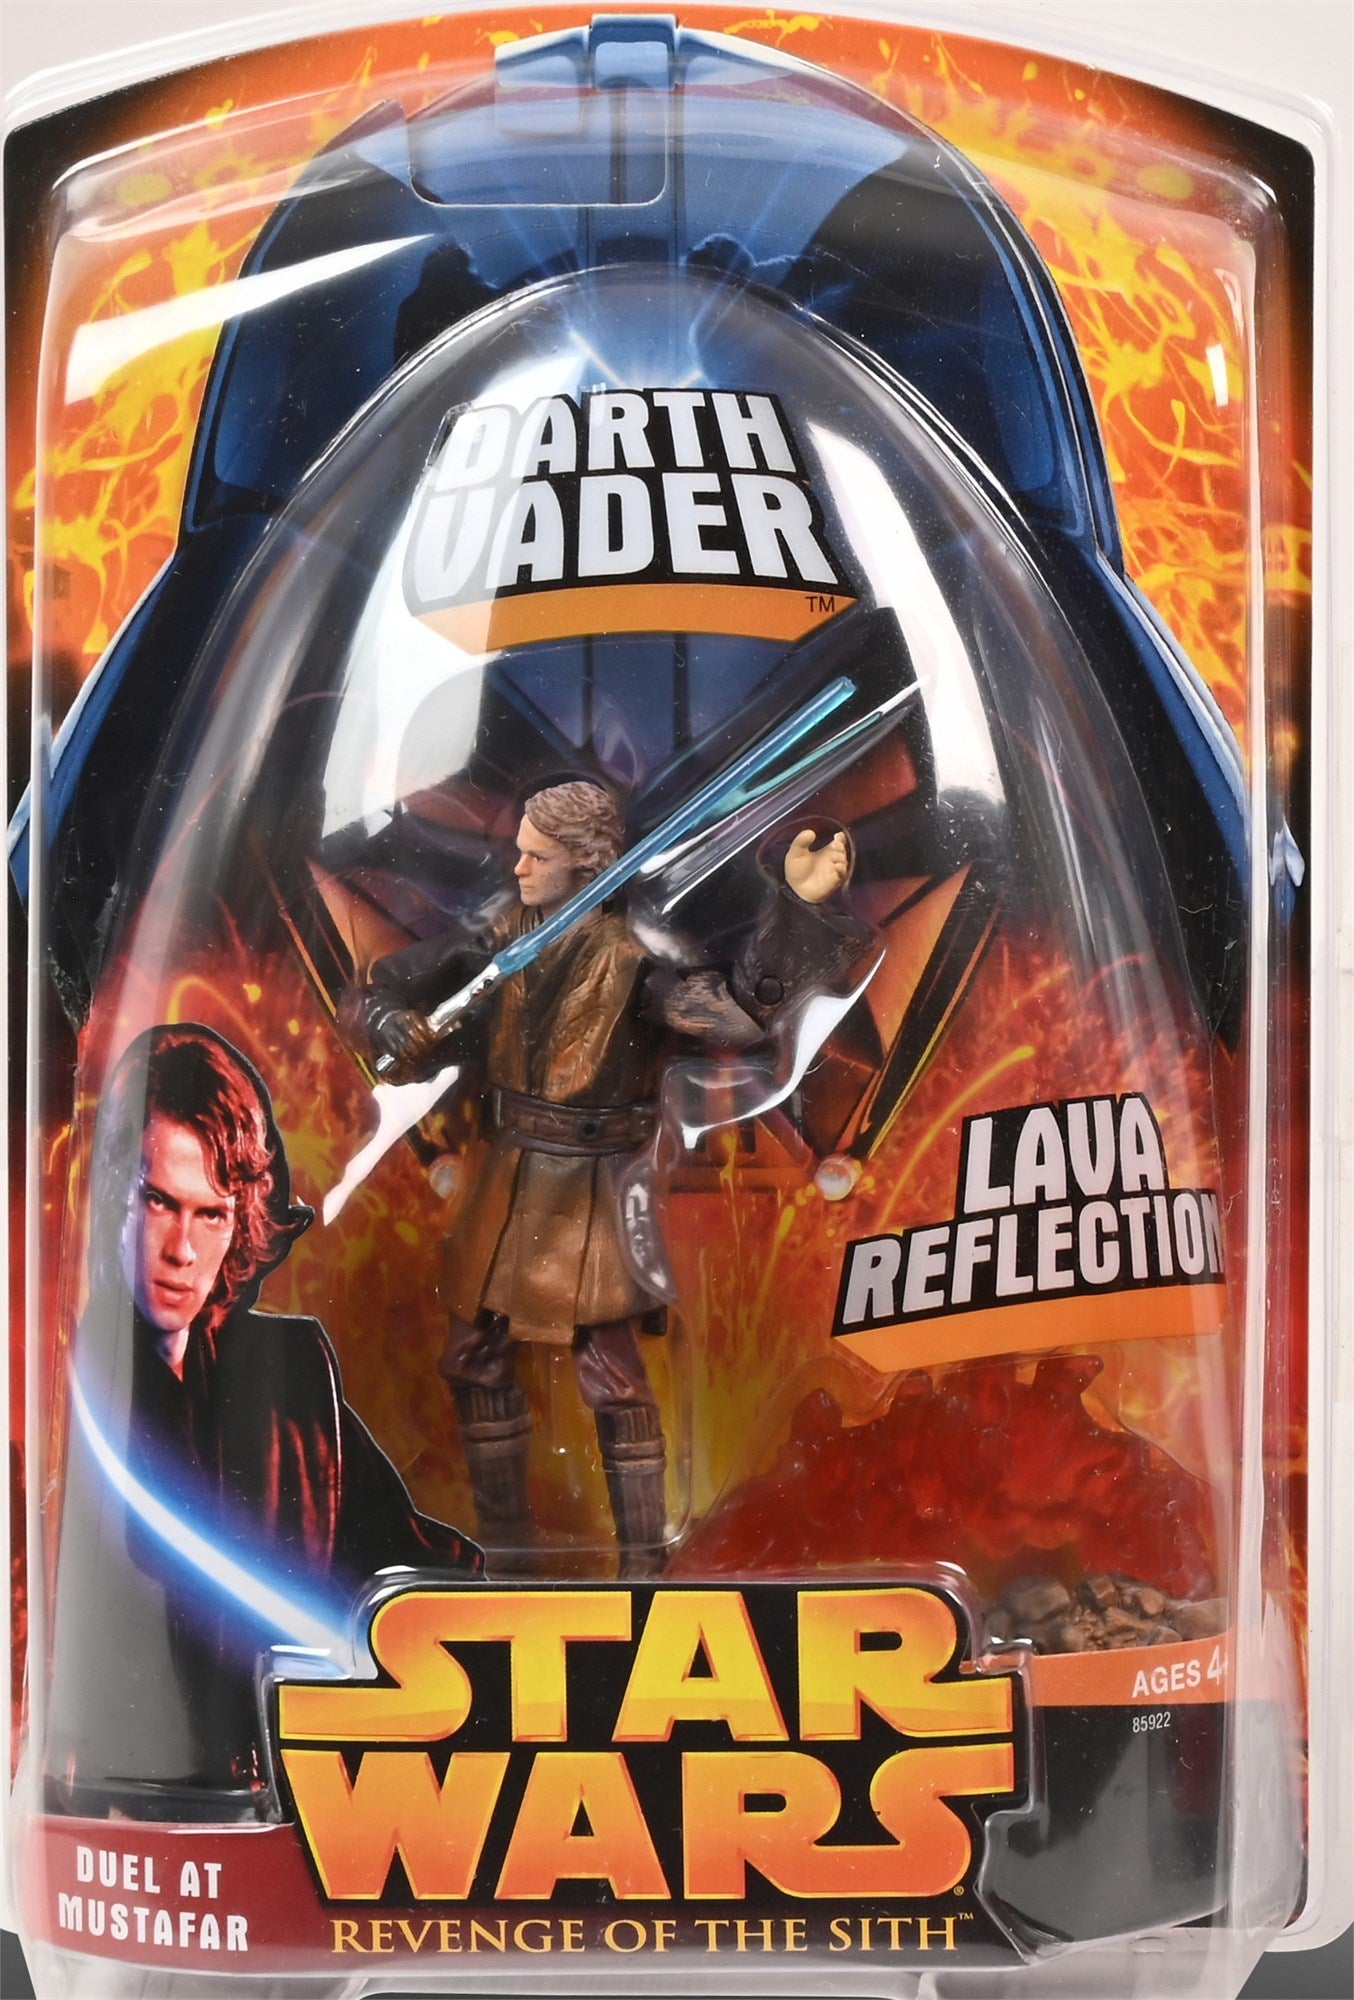 Star Wars Revenge of the Sith - Darth Vader - Lava Reflection (Duel at Mustafar)